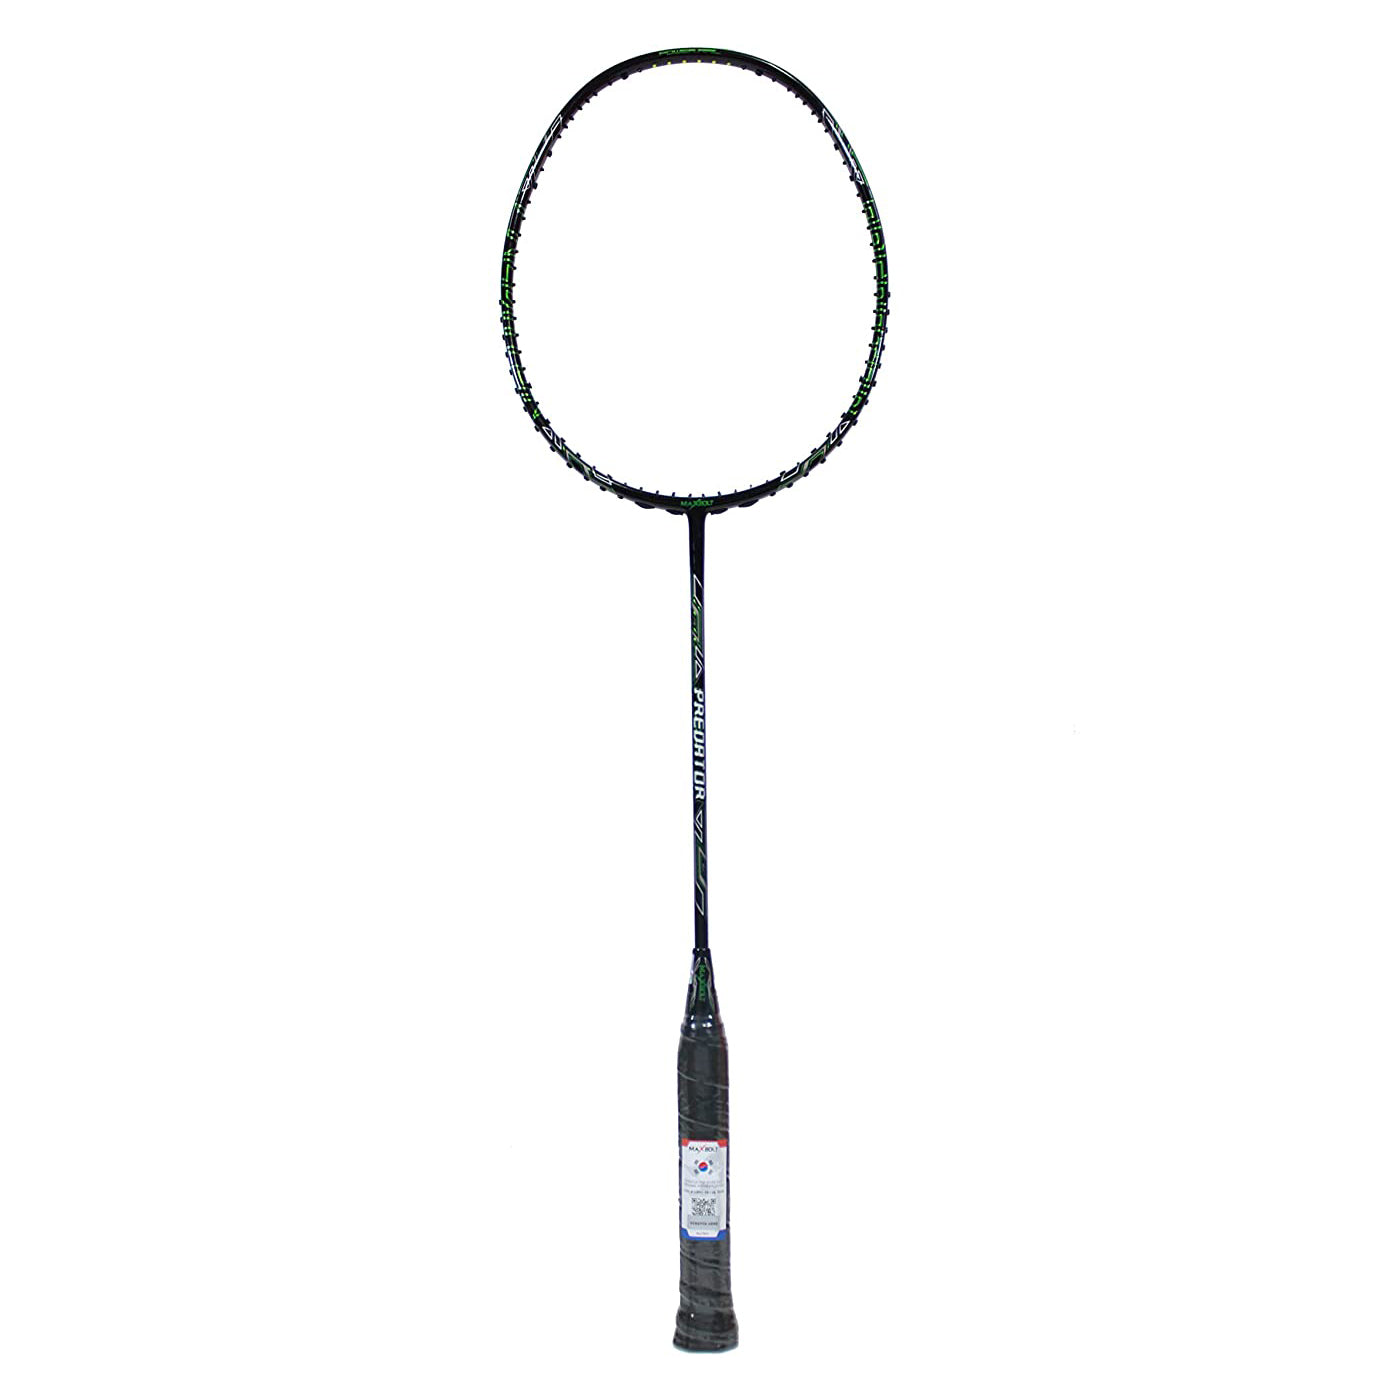 Maxbolt Predator Unstrung Badminton Racquet - Best Price online Prokicksports.com